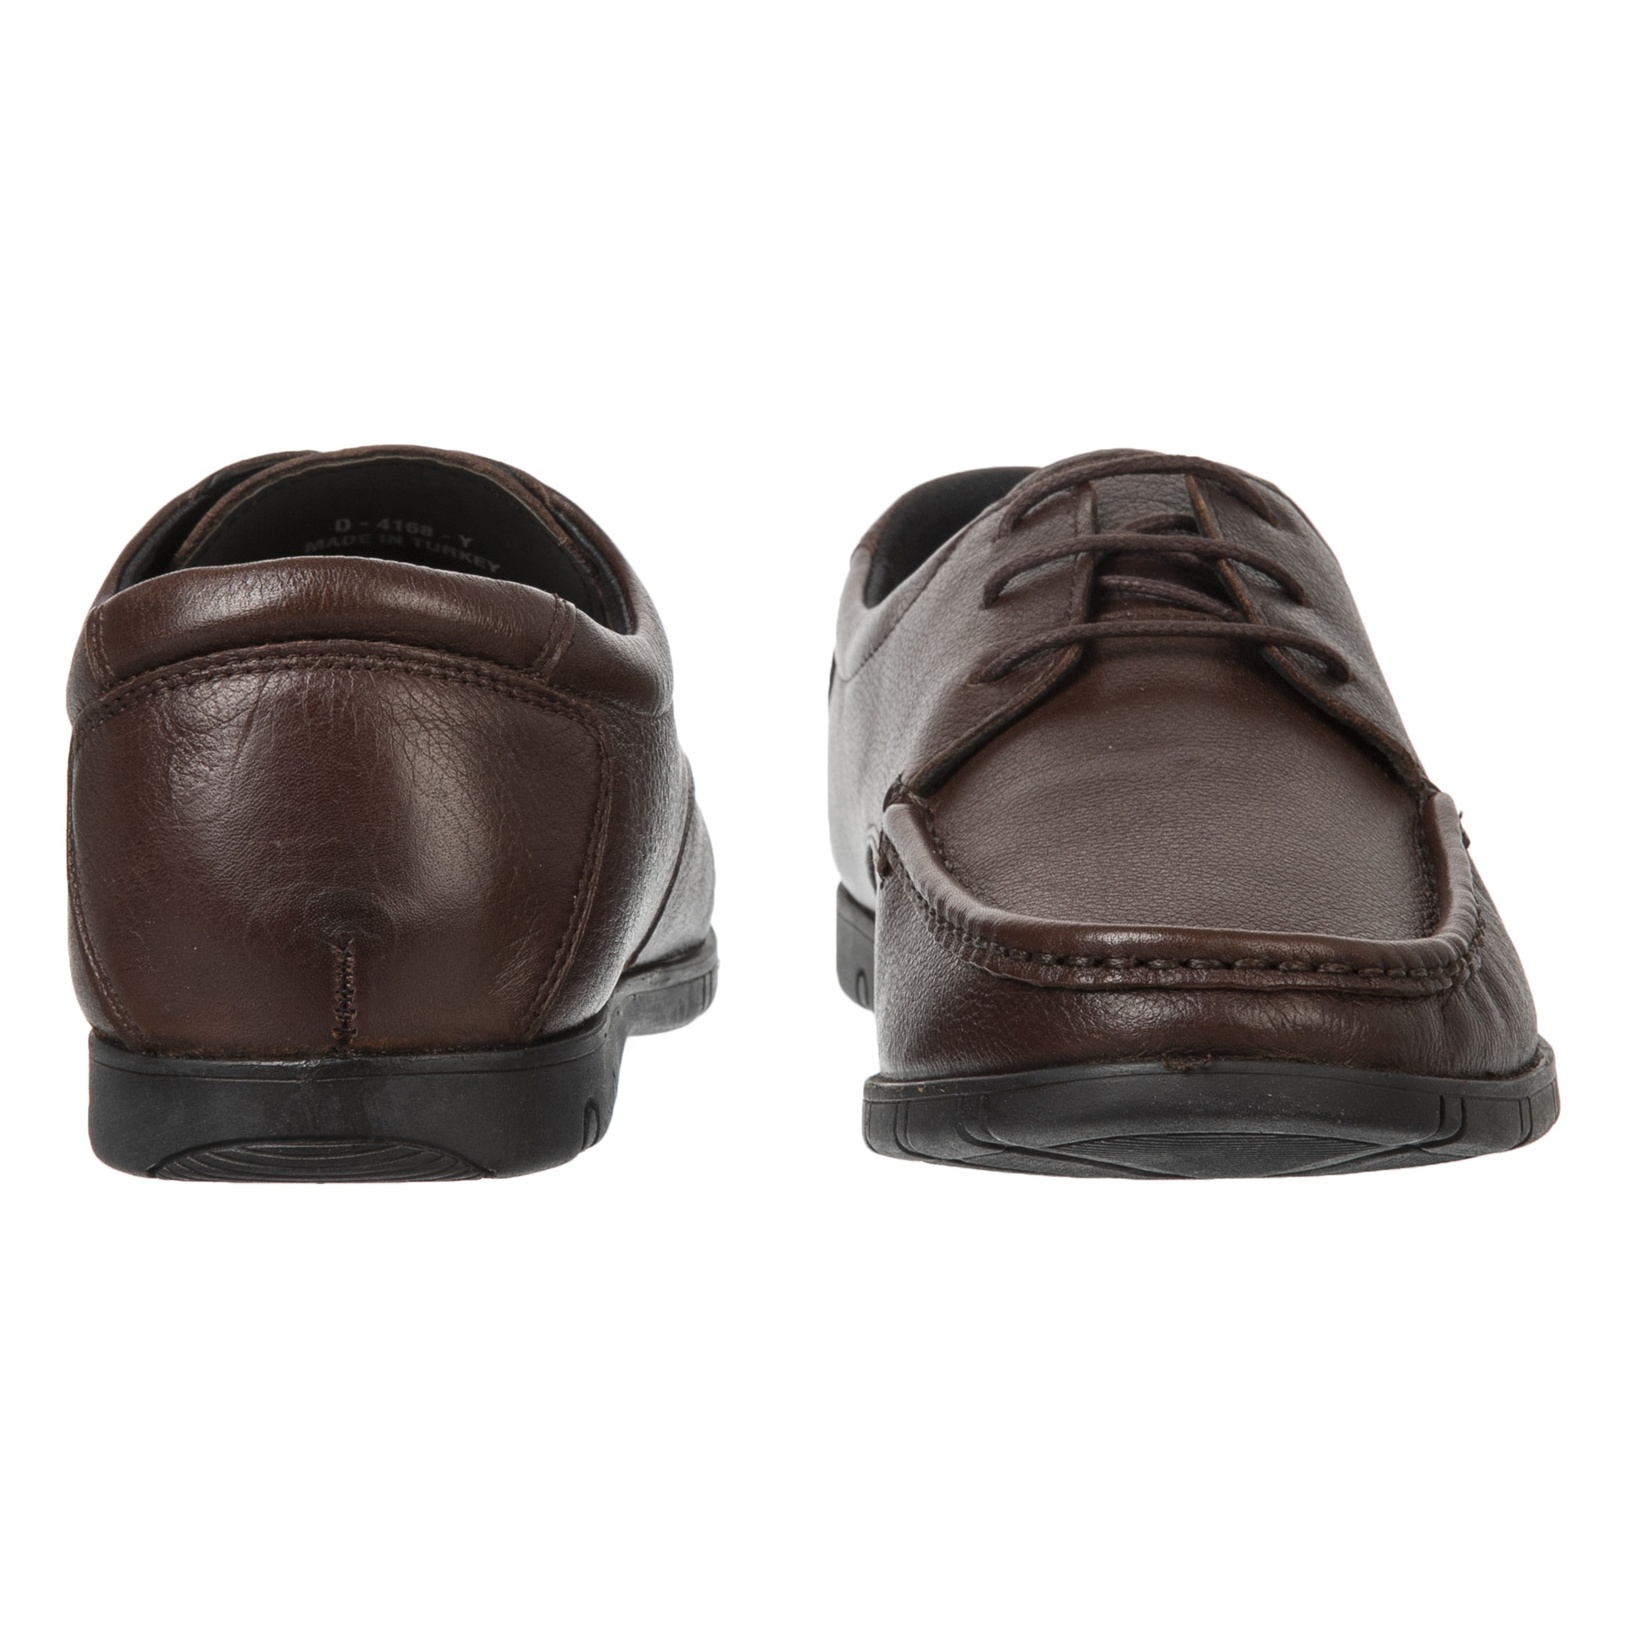 کفش روزمره مردانه فلوگارت مدل 100317180-103 - قهوه ای - 5